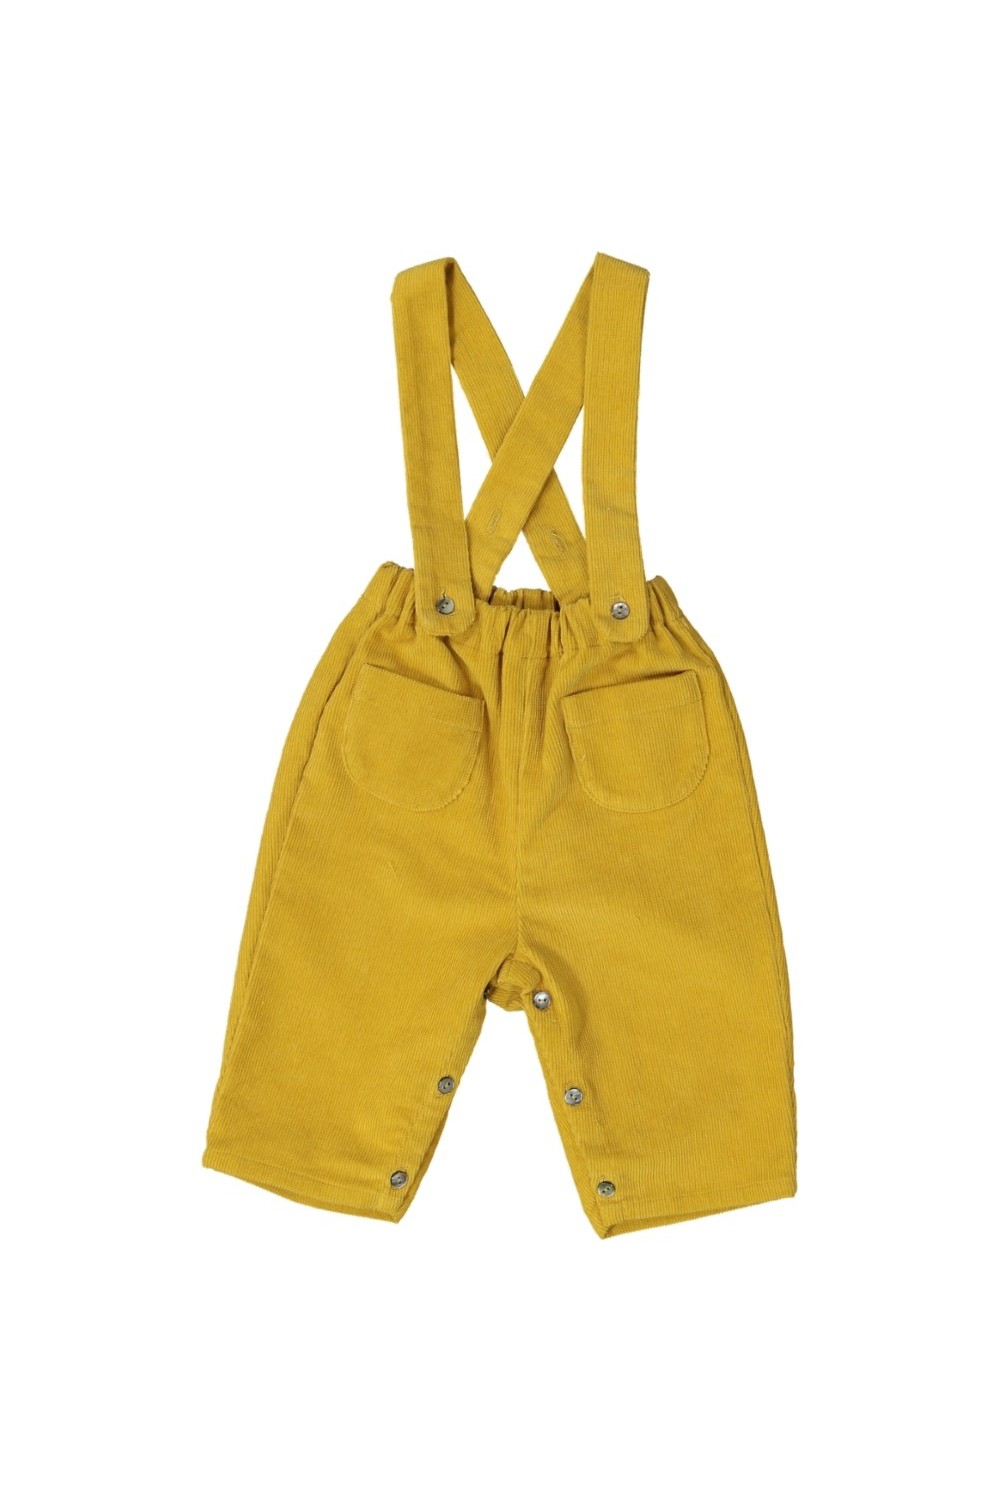 pantalon bébé coton bio jaune velours mimosa